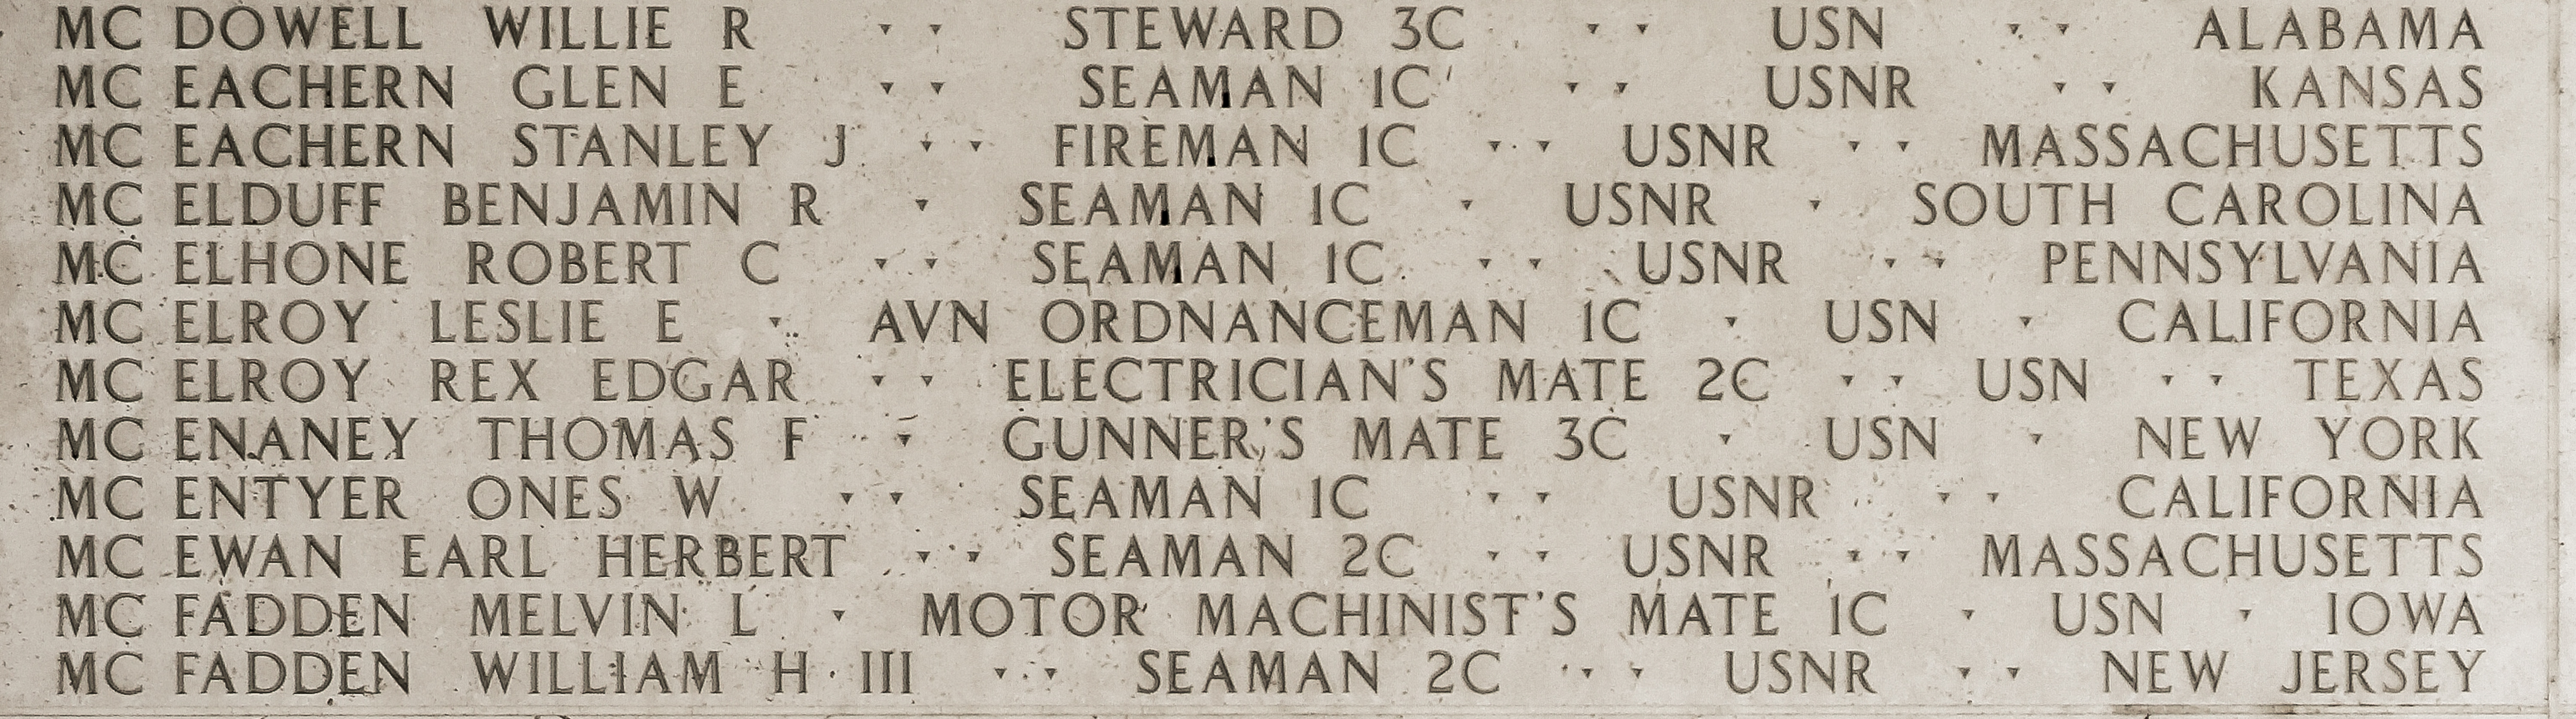 Benjamin R. McElduff, Seaman First Class